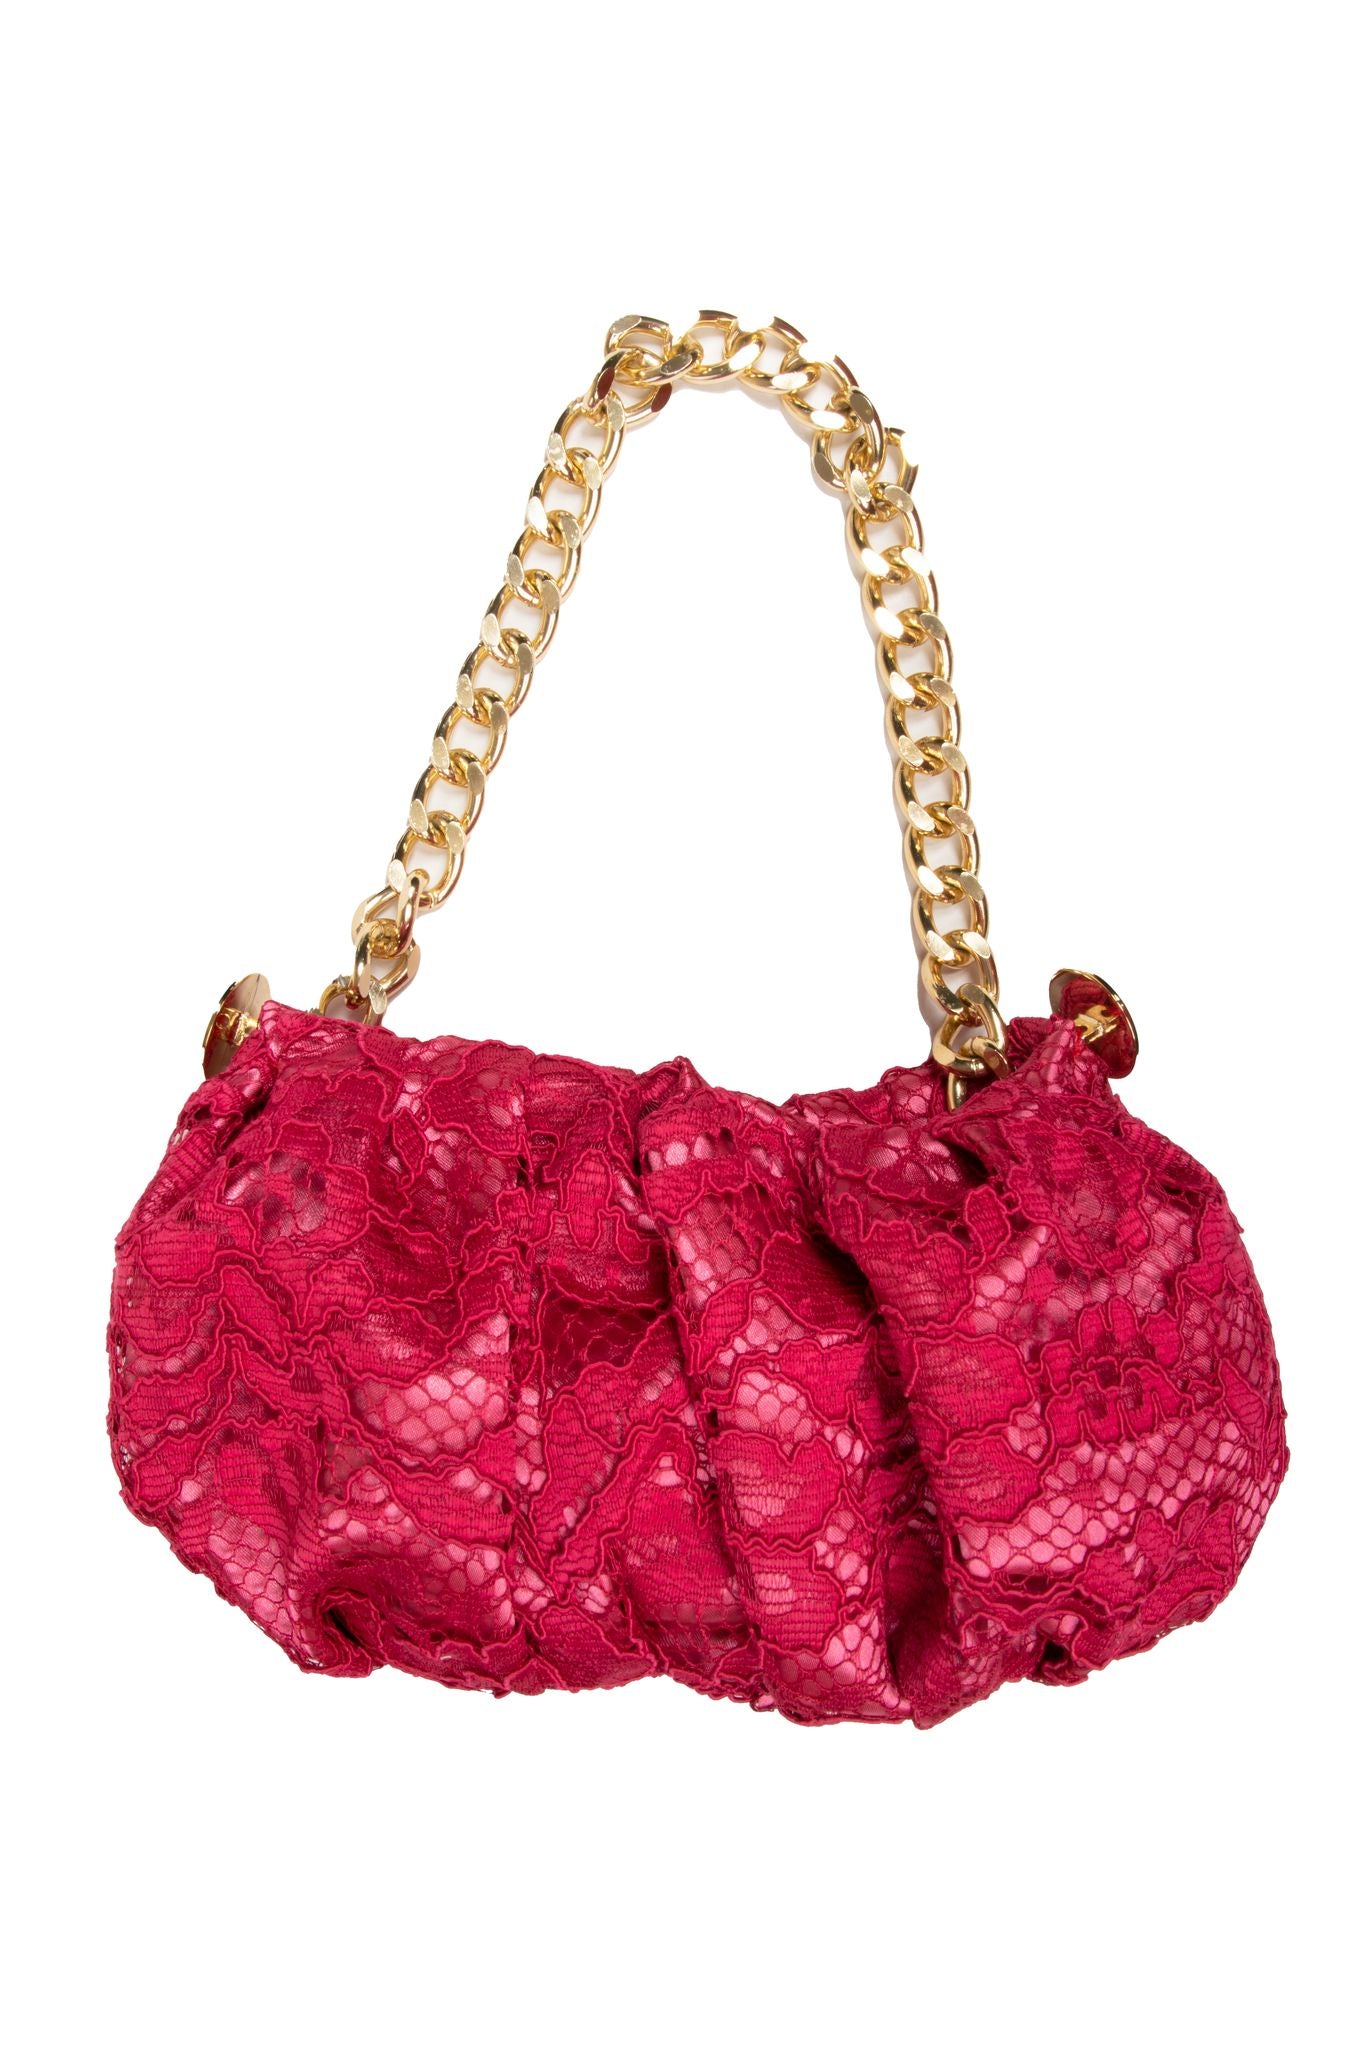 Beautiful Gold Chain Bag - All Handbags